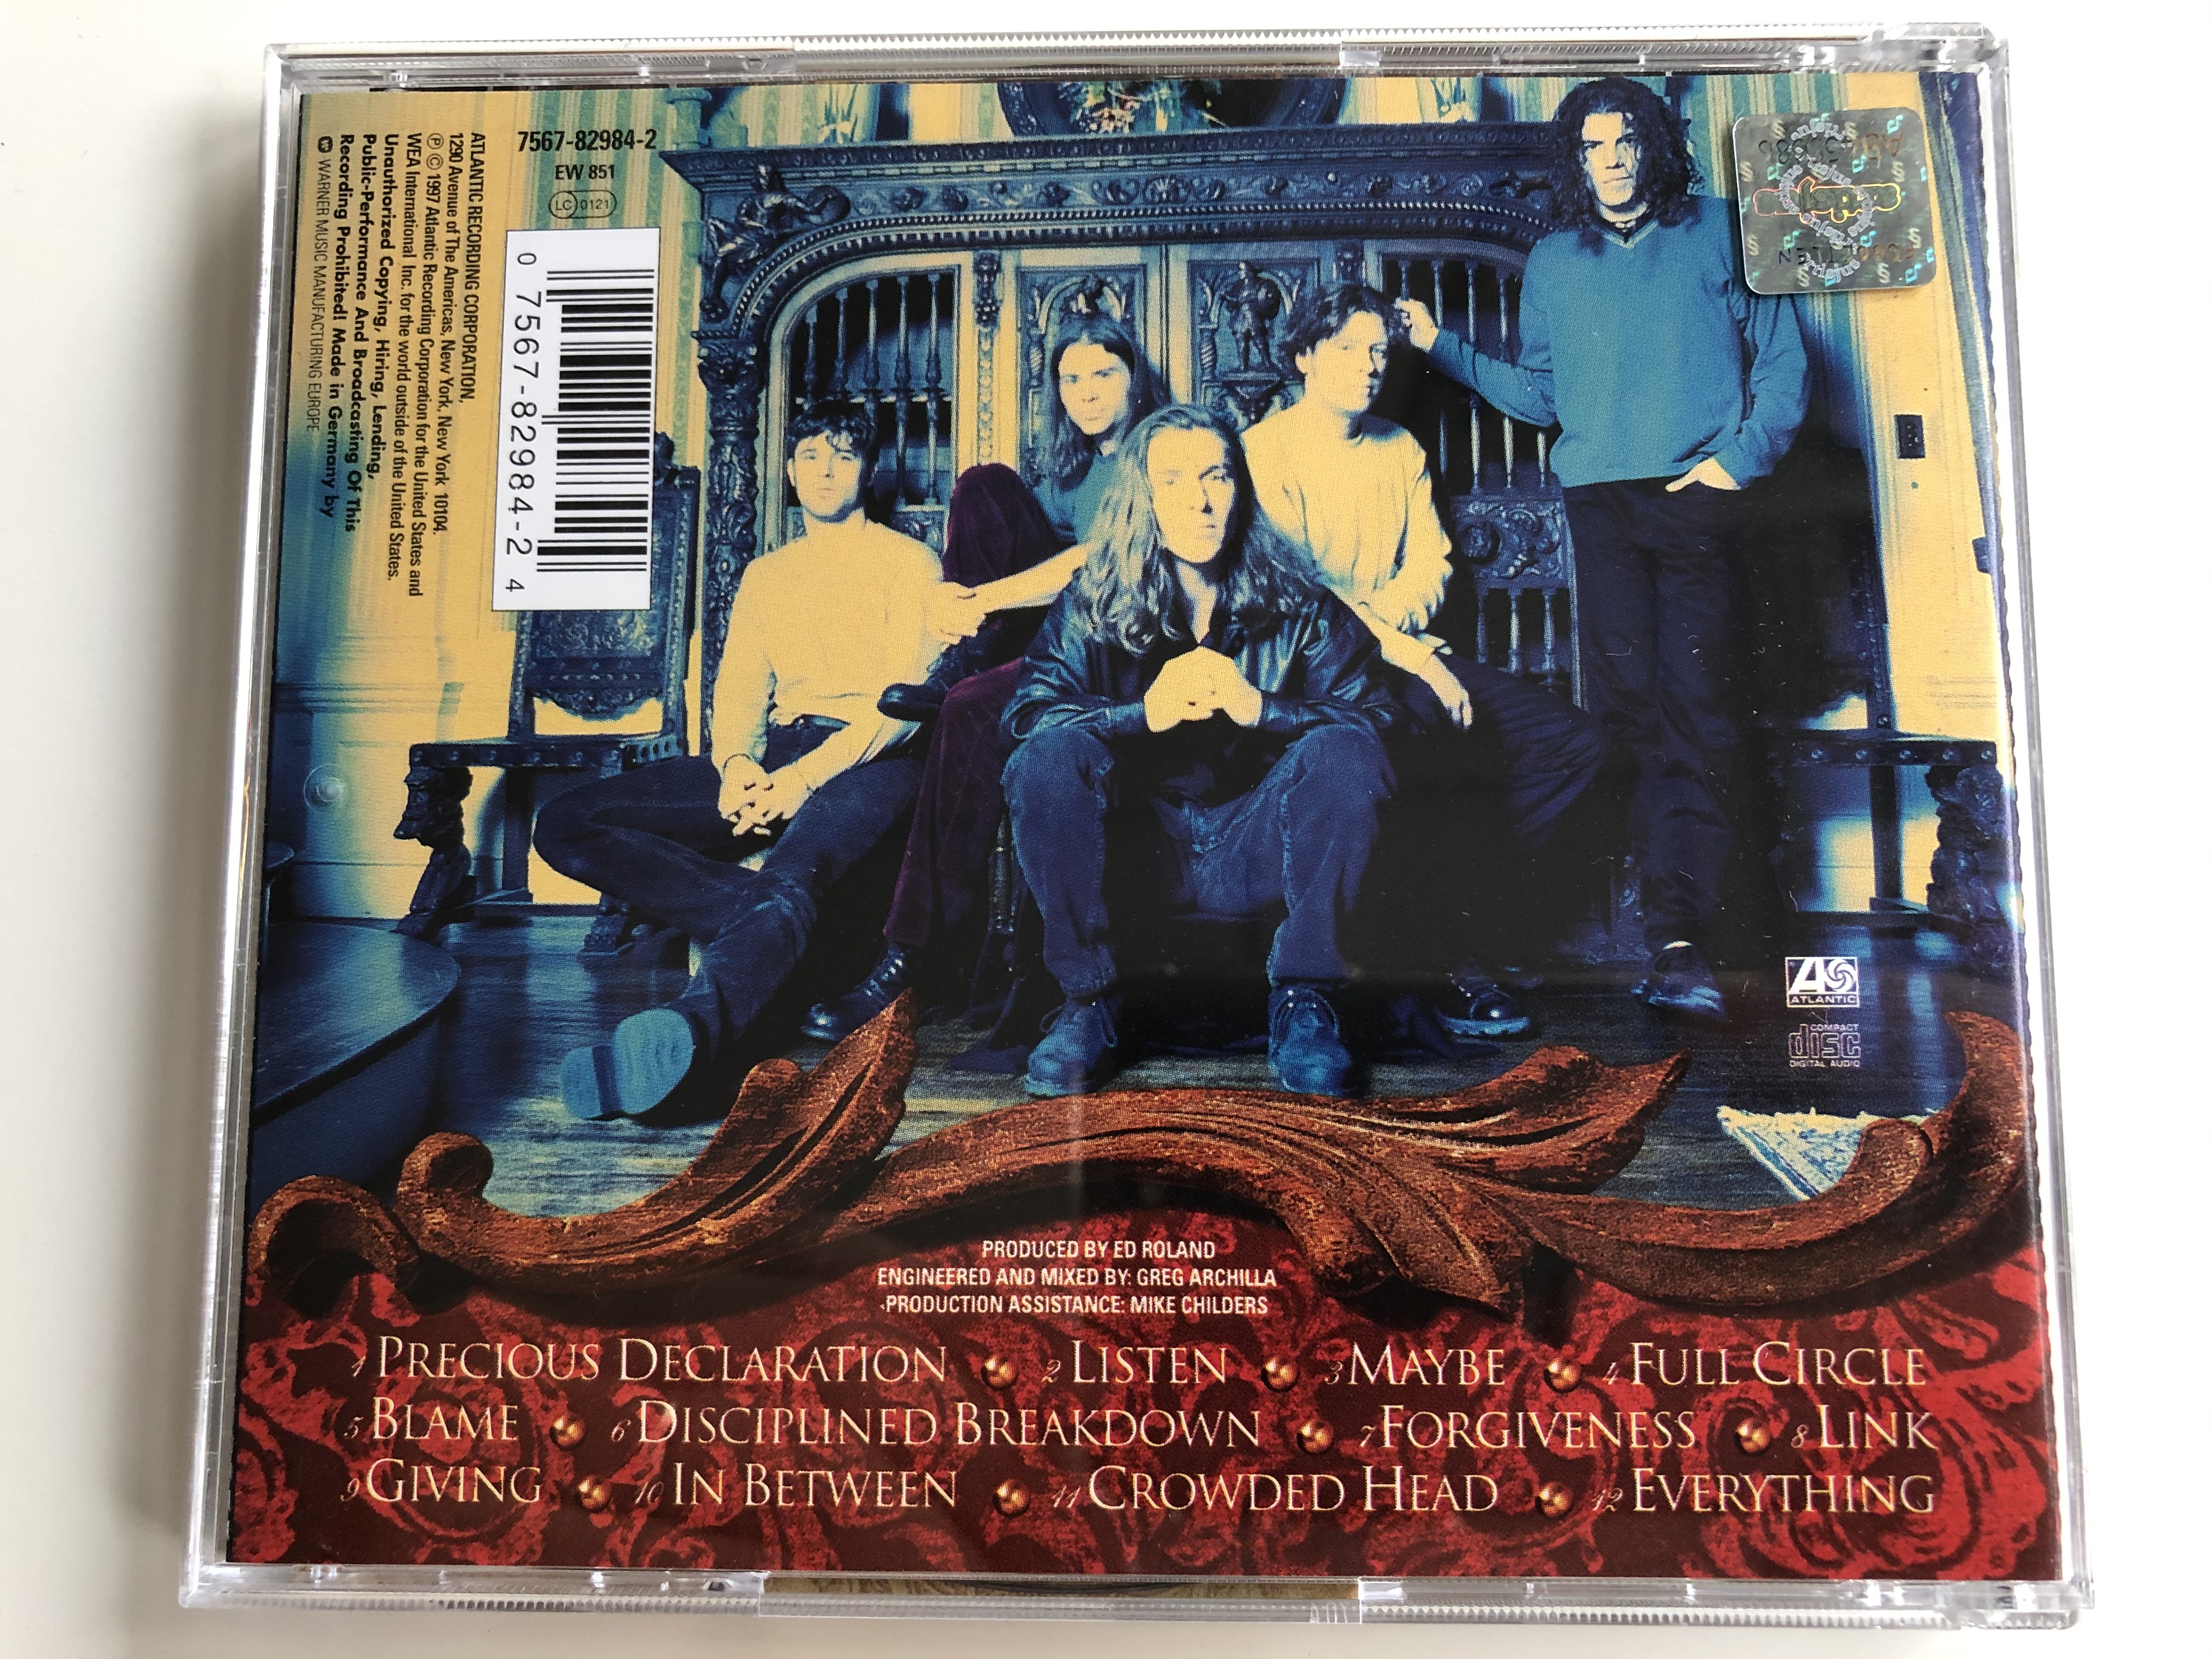 collective-soul-disciplined-breakdown-atlantic-audio-cd-1997-7567-82984-2-10-.jpg